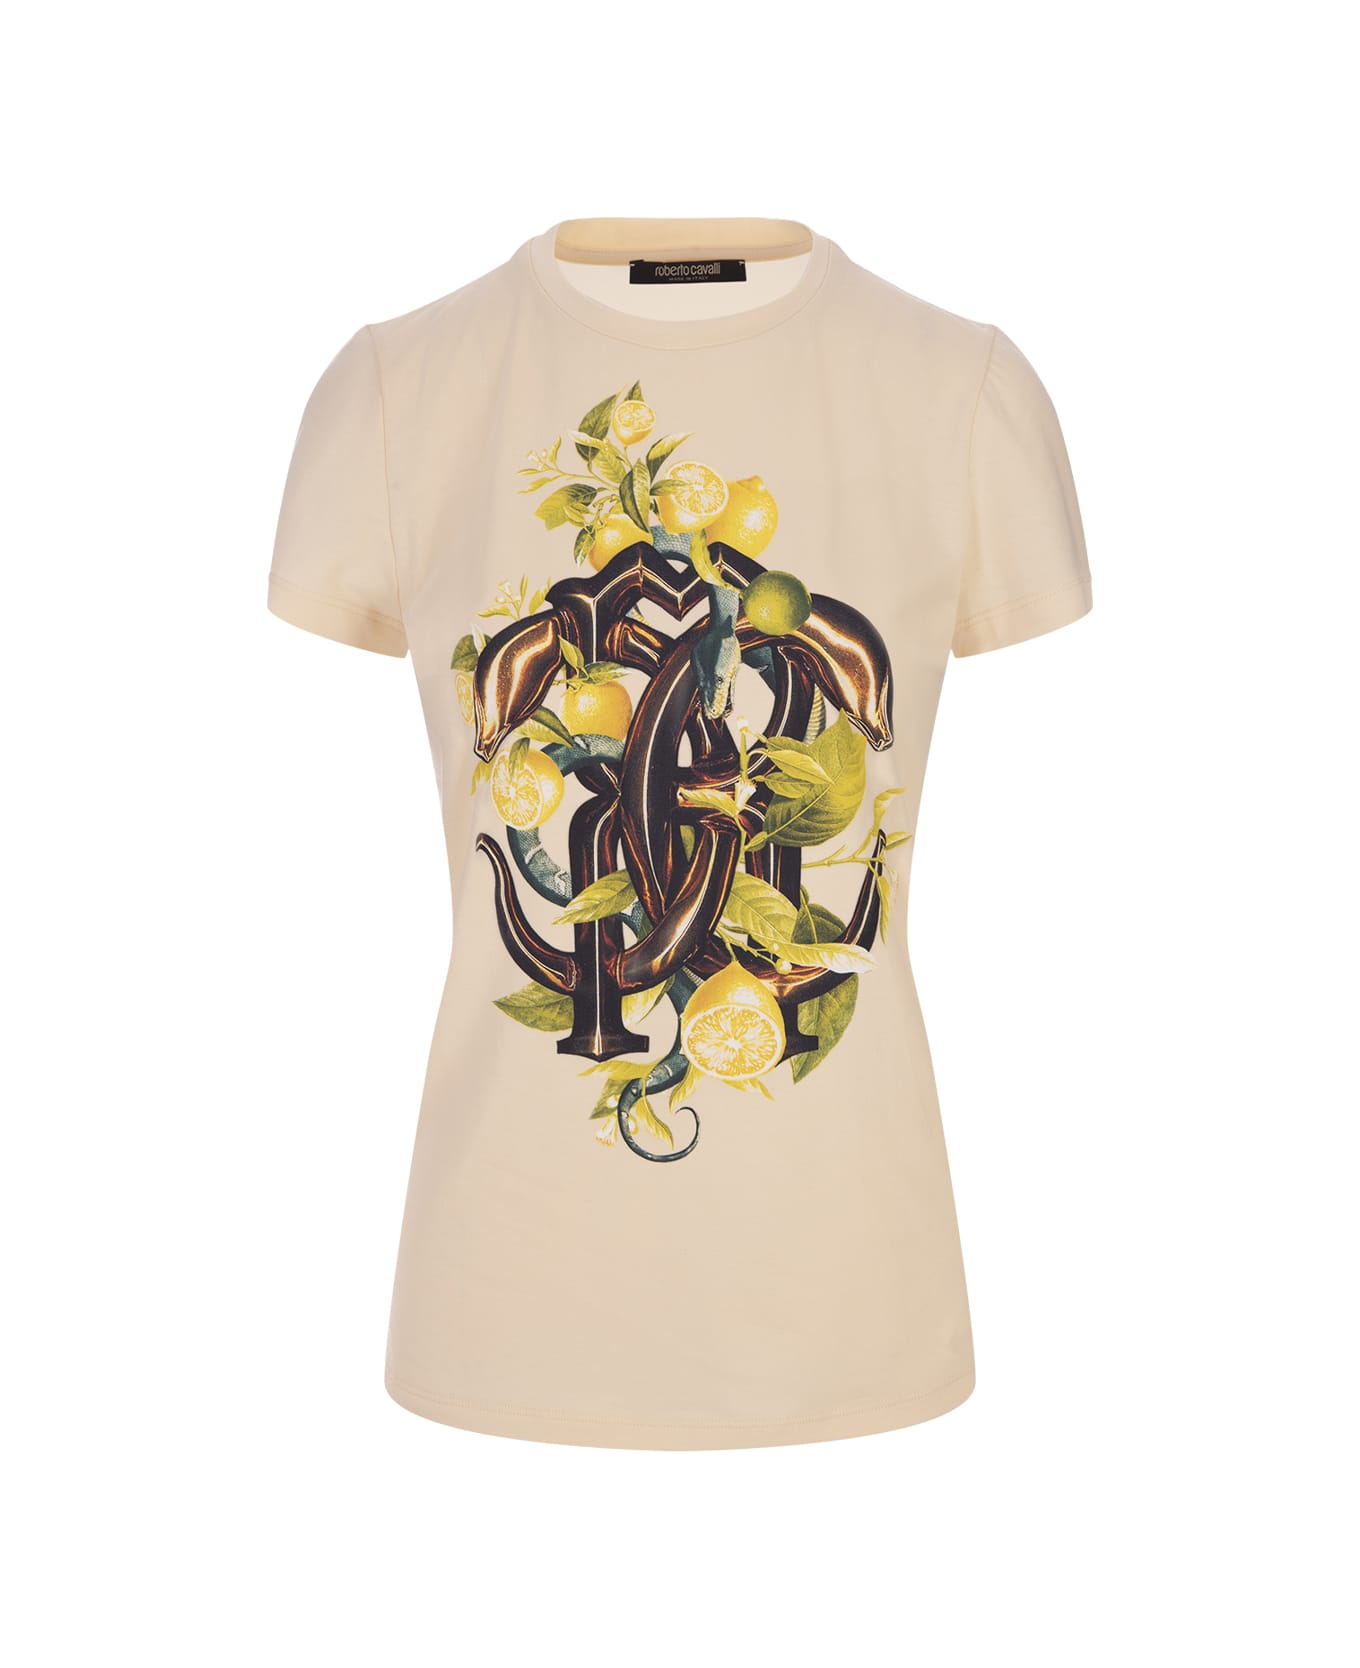 Roberto Cavalli Ivory T-shirt With Lemons And Snake Print - White